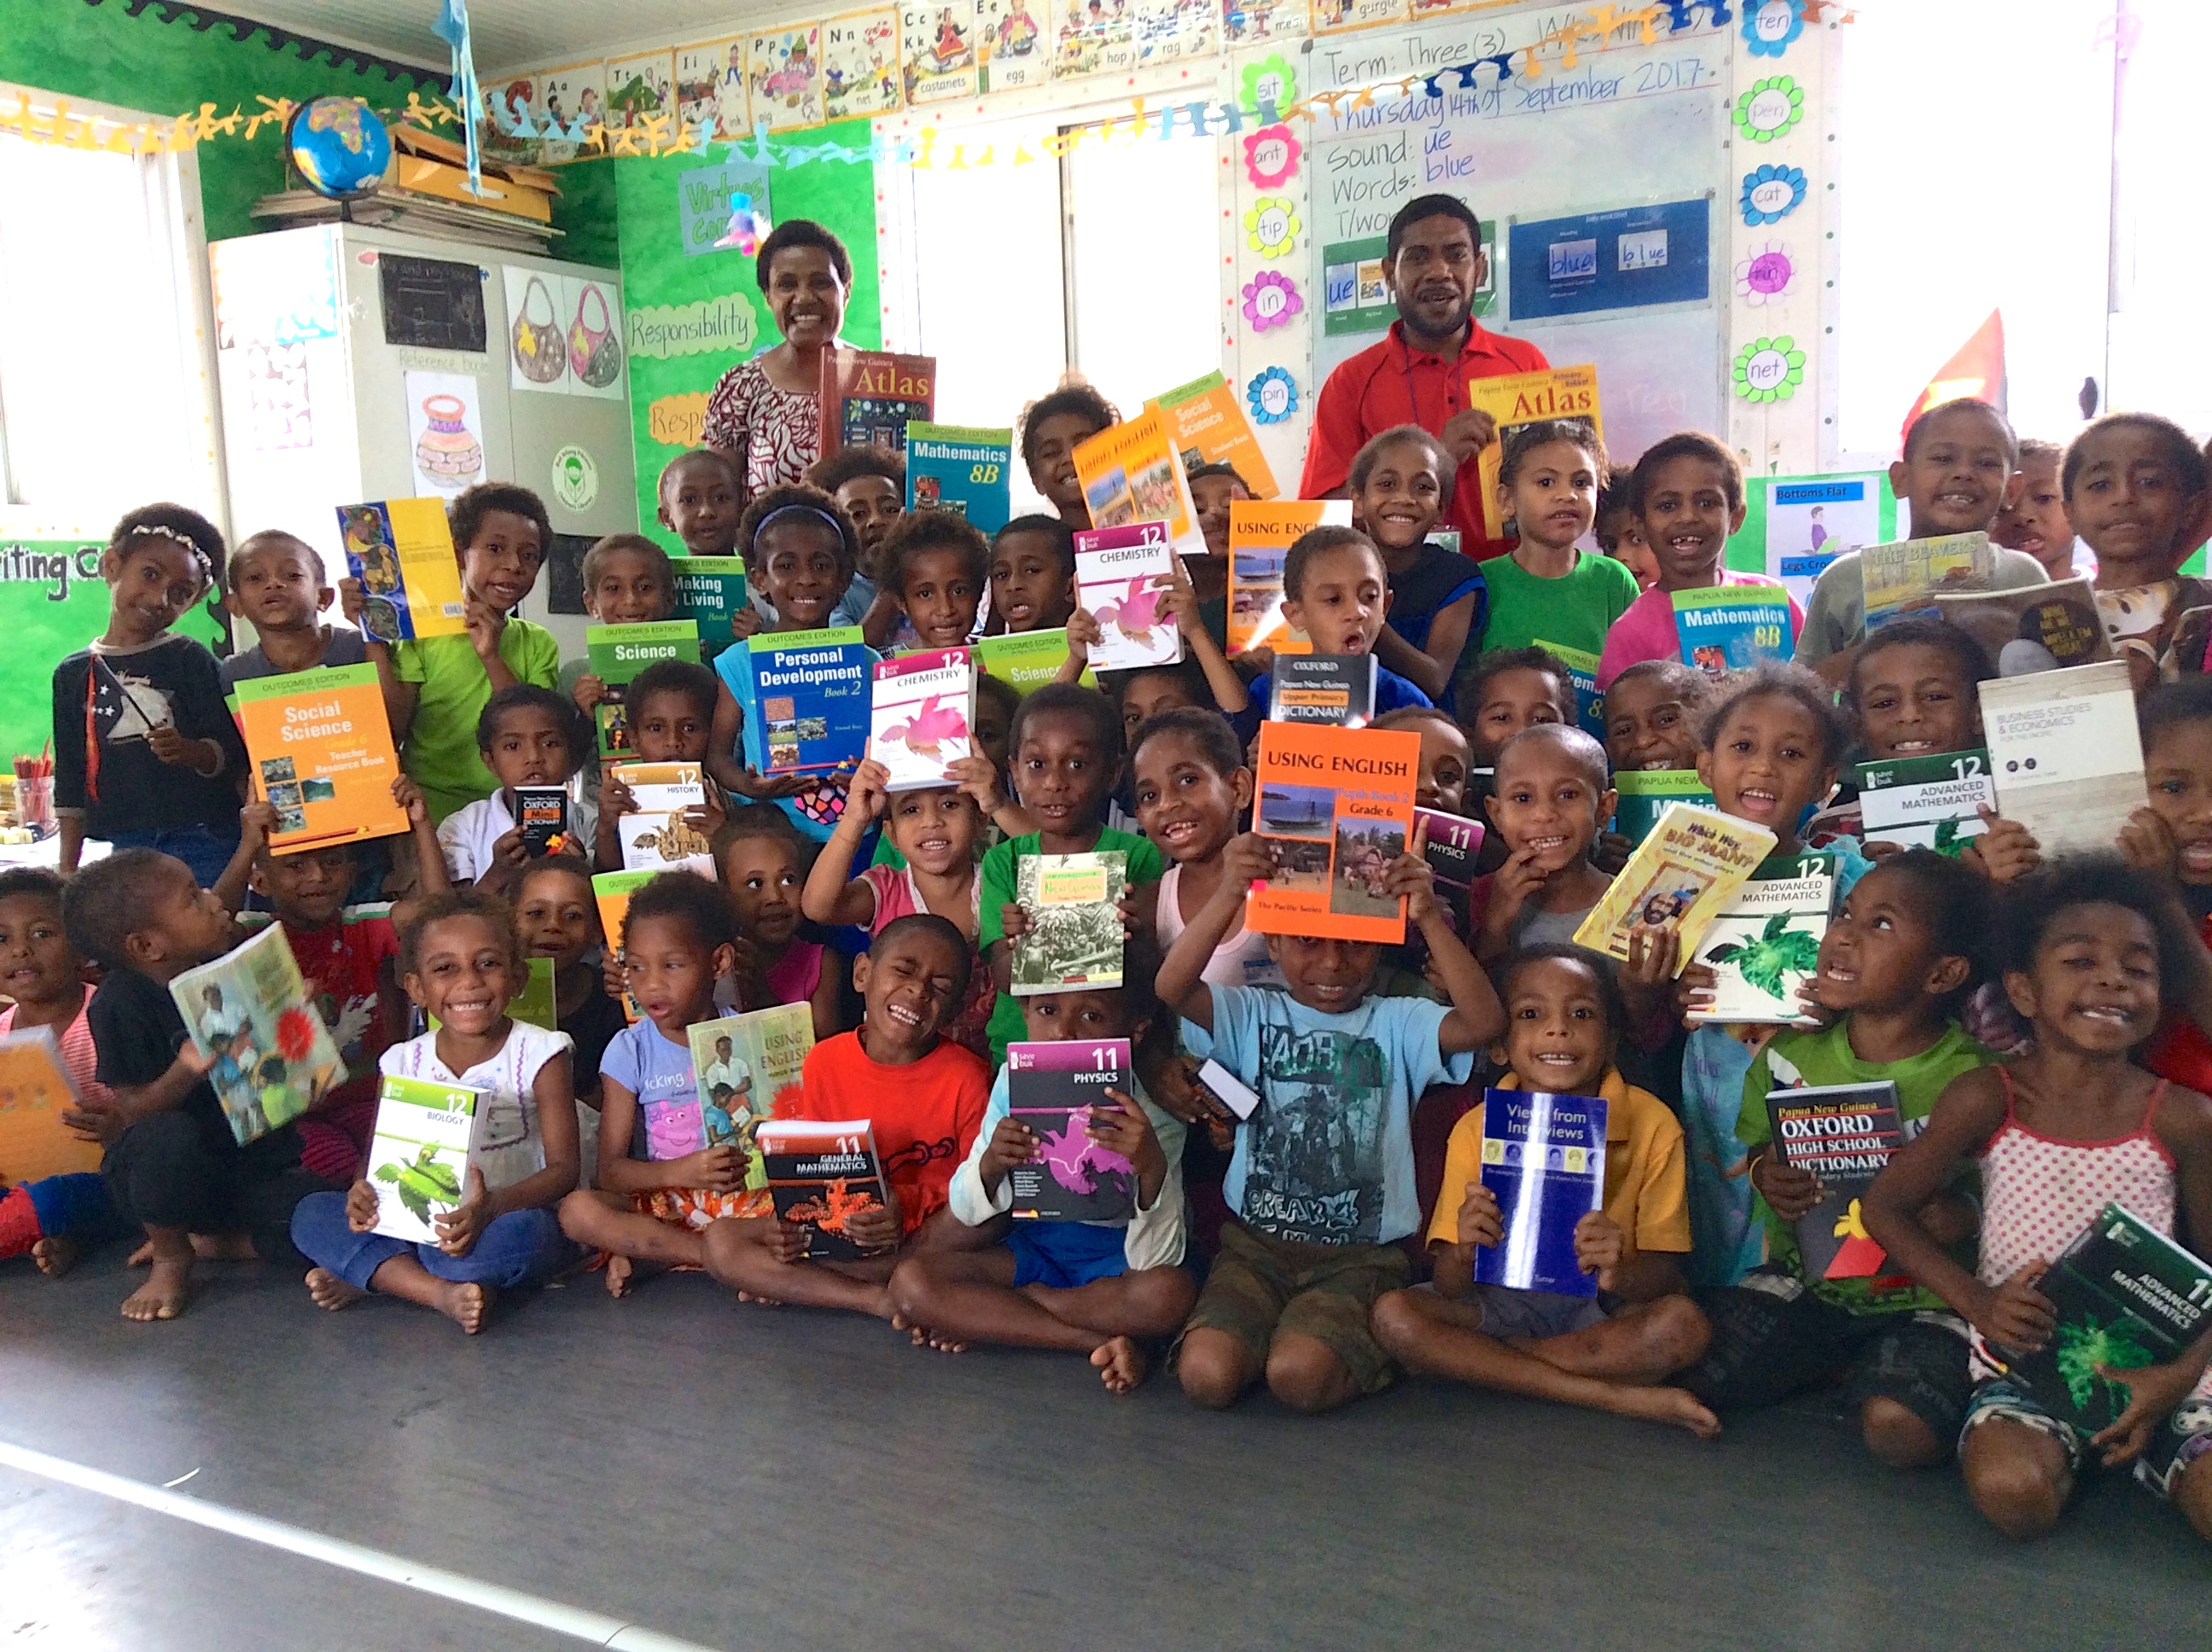 Smiling faces greet a donation of OUP books to Buk bilong Pikinini